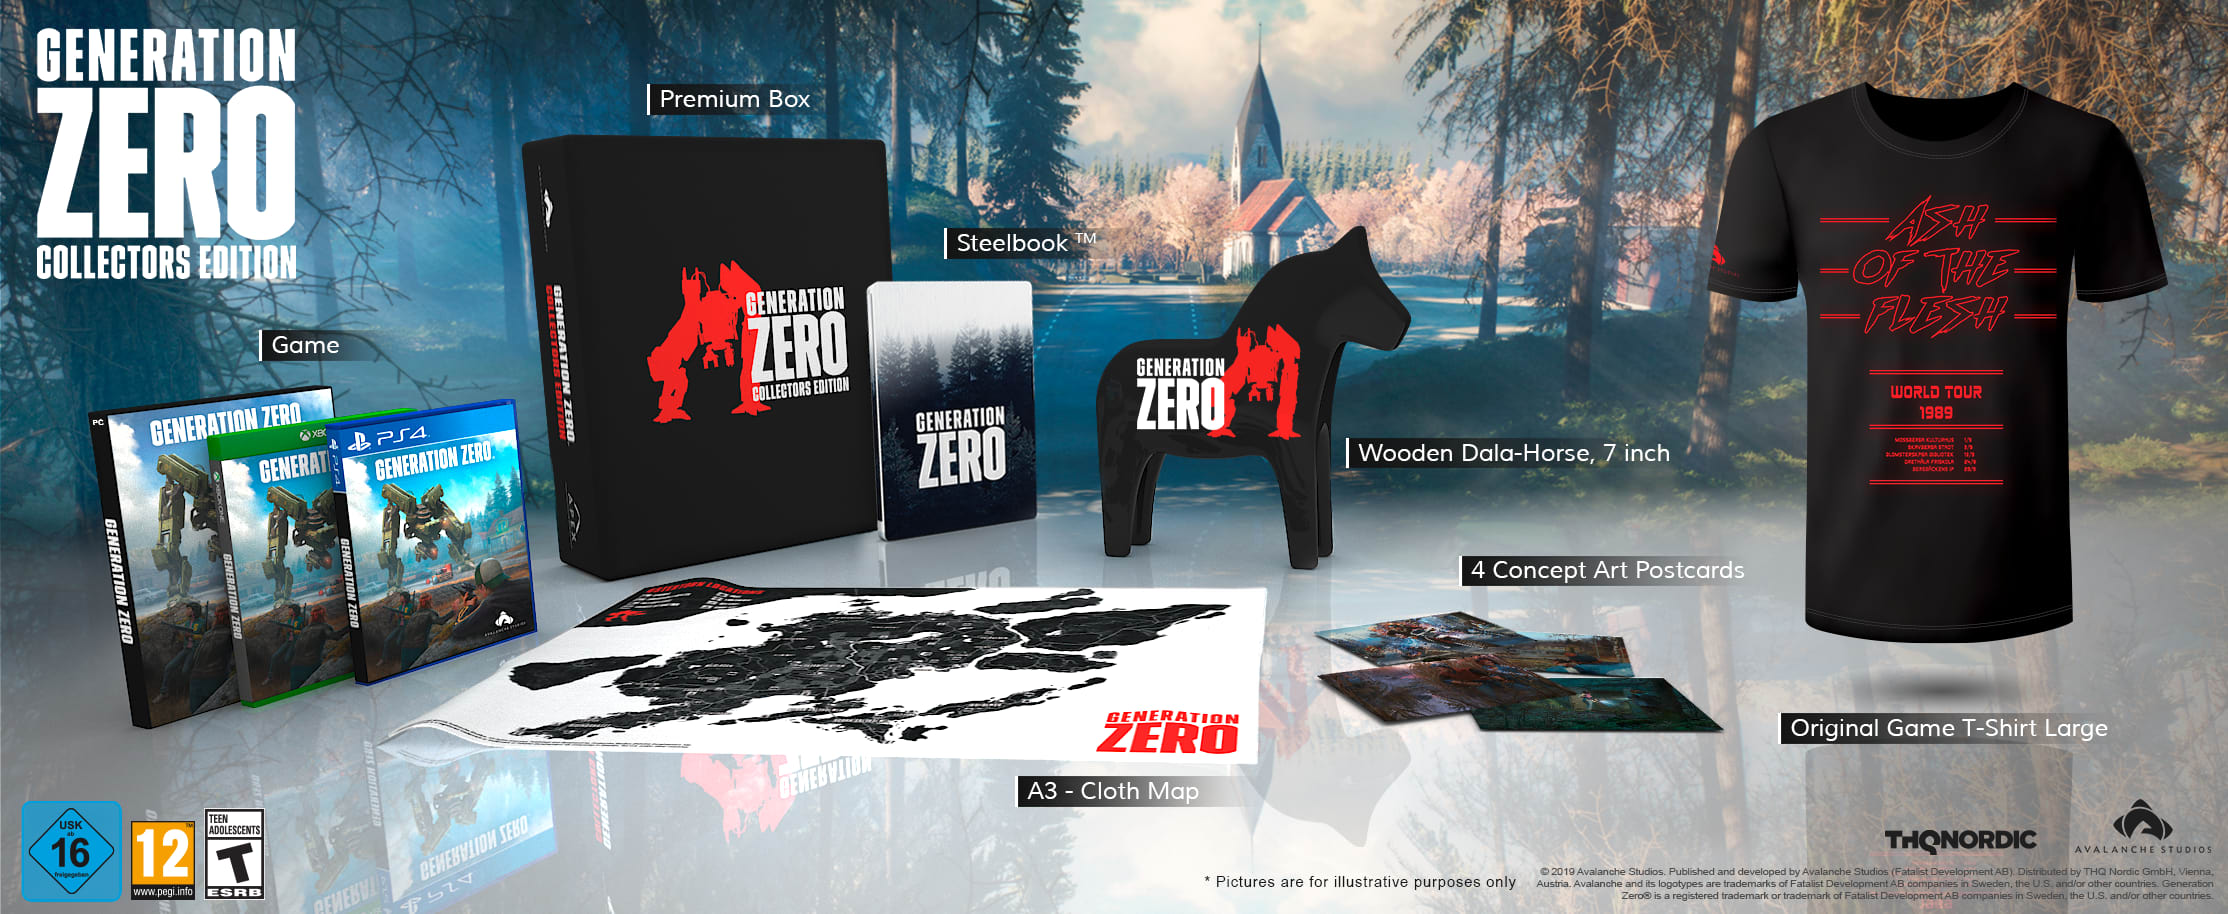 Generation Zero - Collector's Edition (Xbox One), THQ Nordic